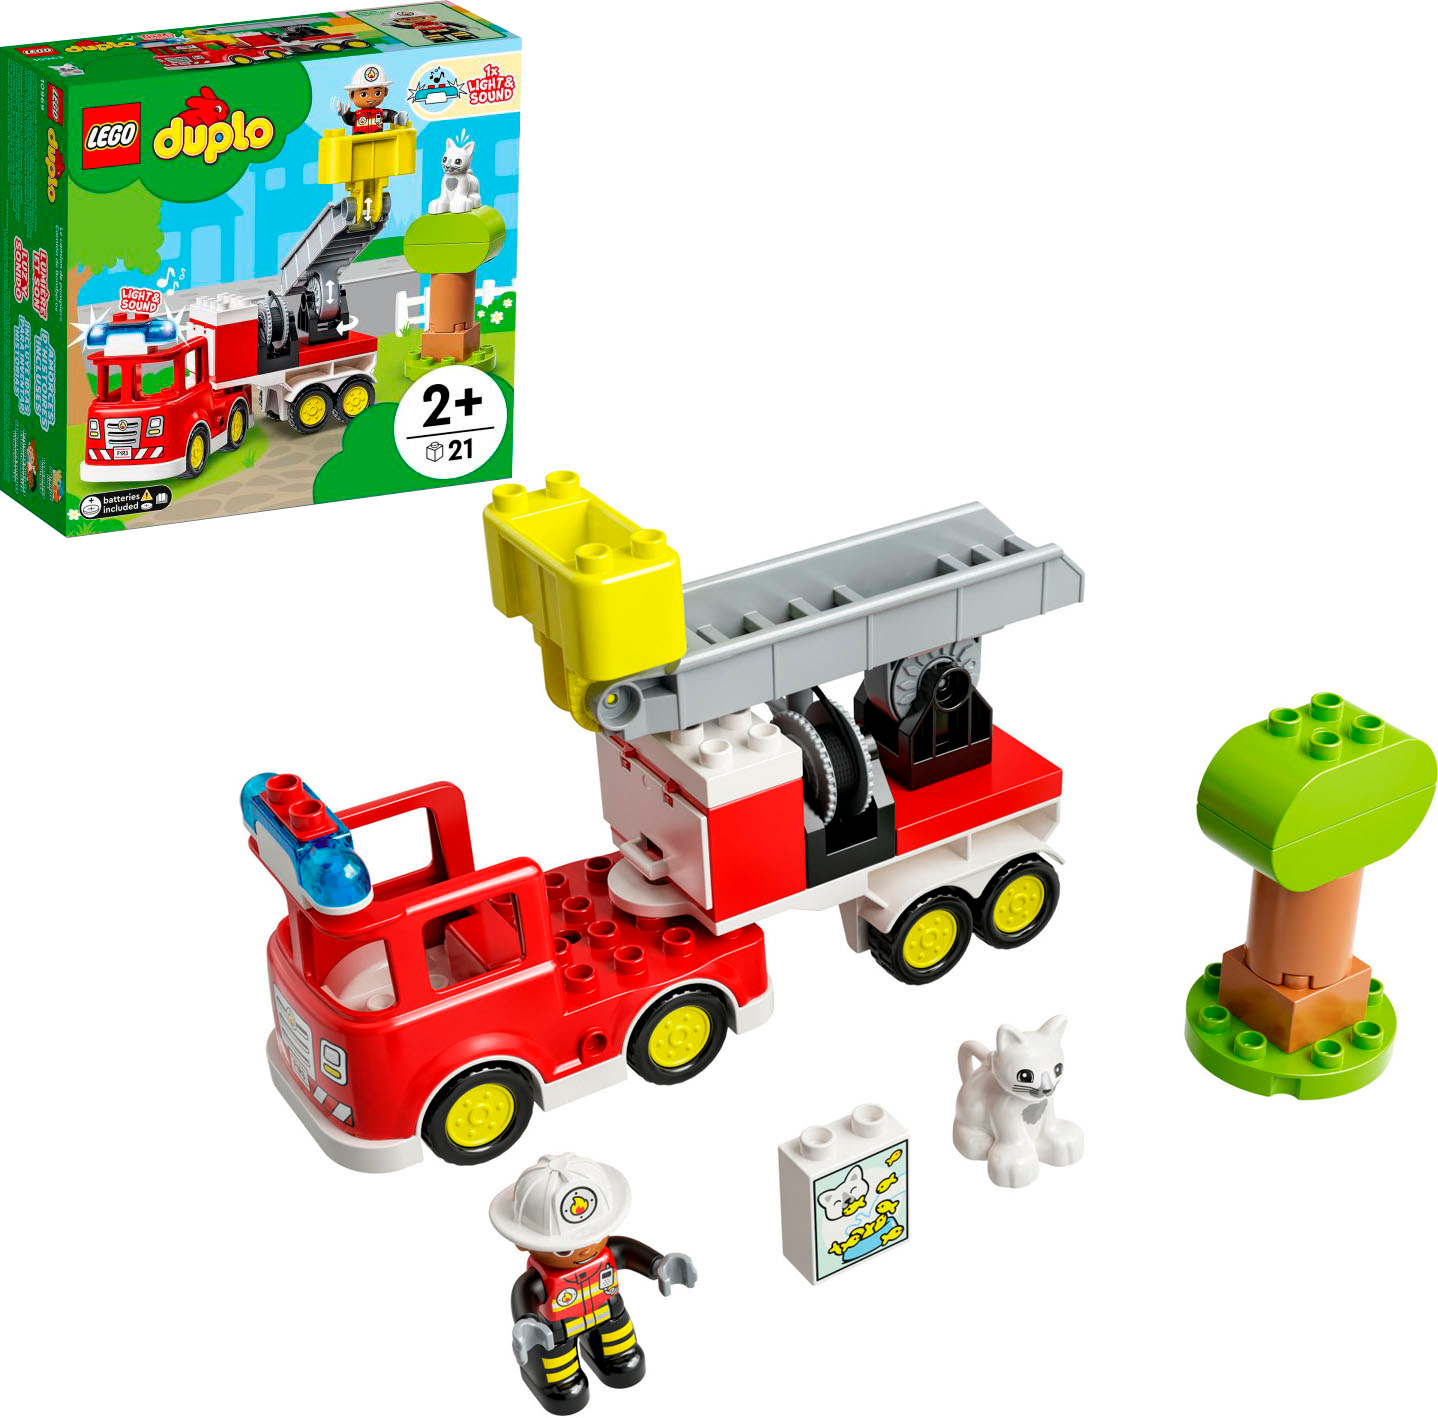 LEGO DUPLO Rescue Fire Truck 10969 Building Toy (21Pieces) 6379259 - Best